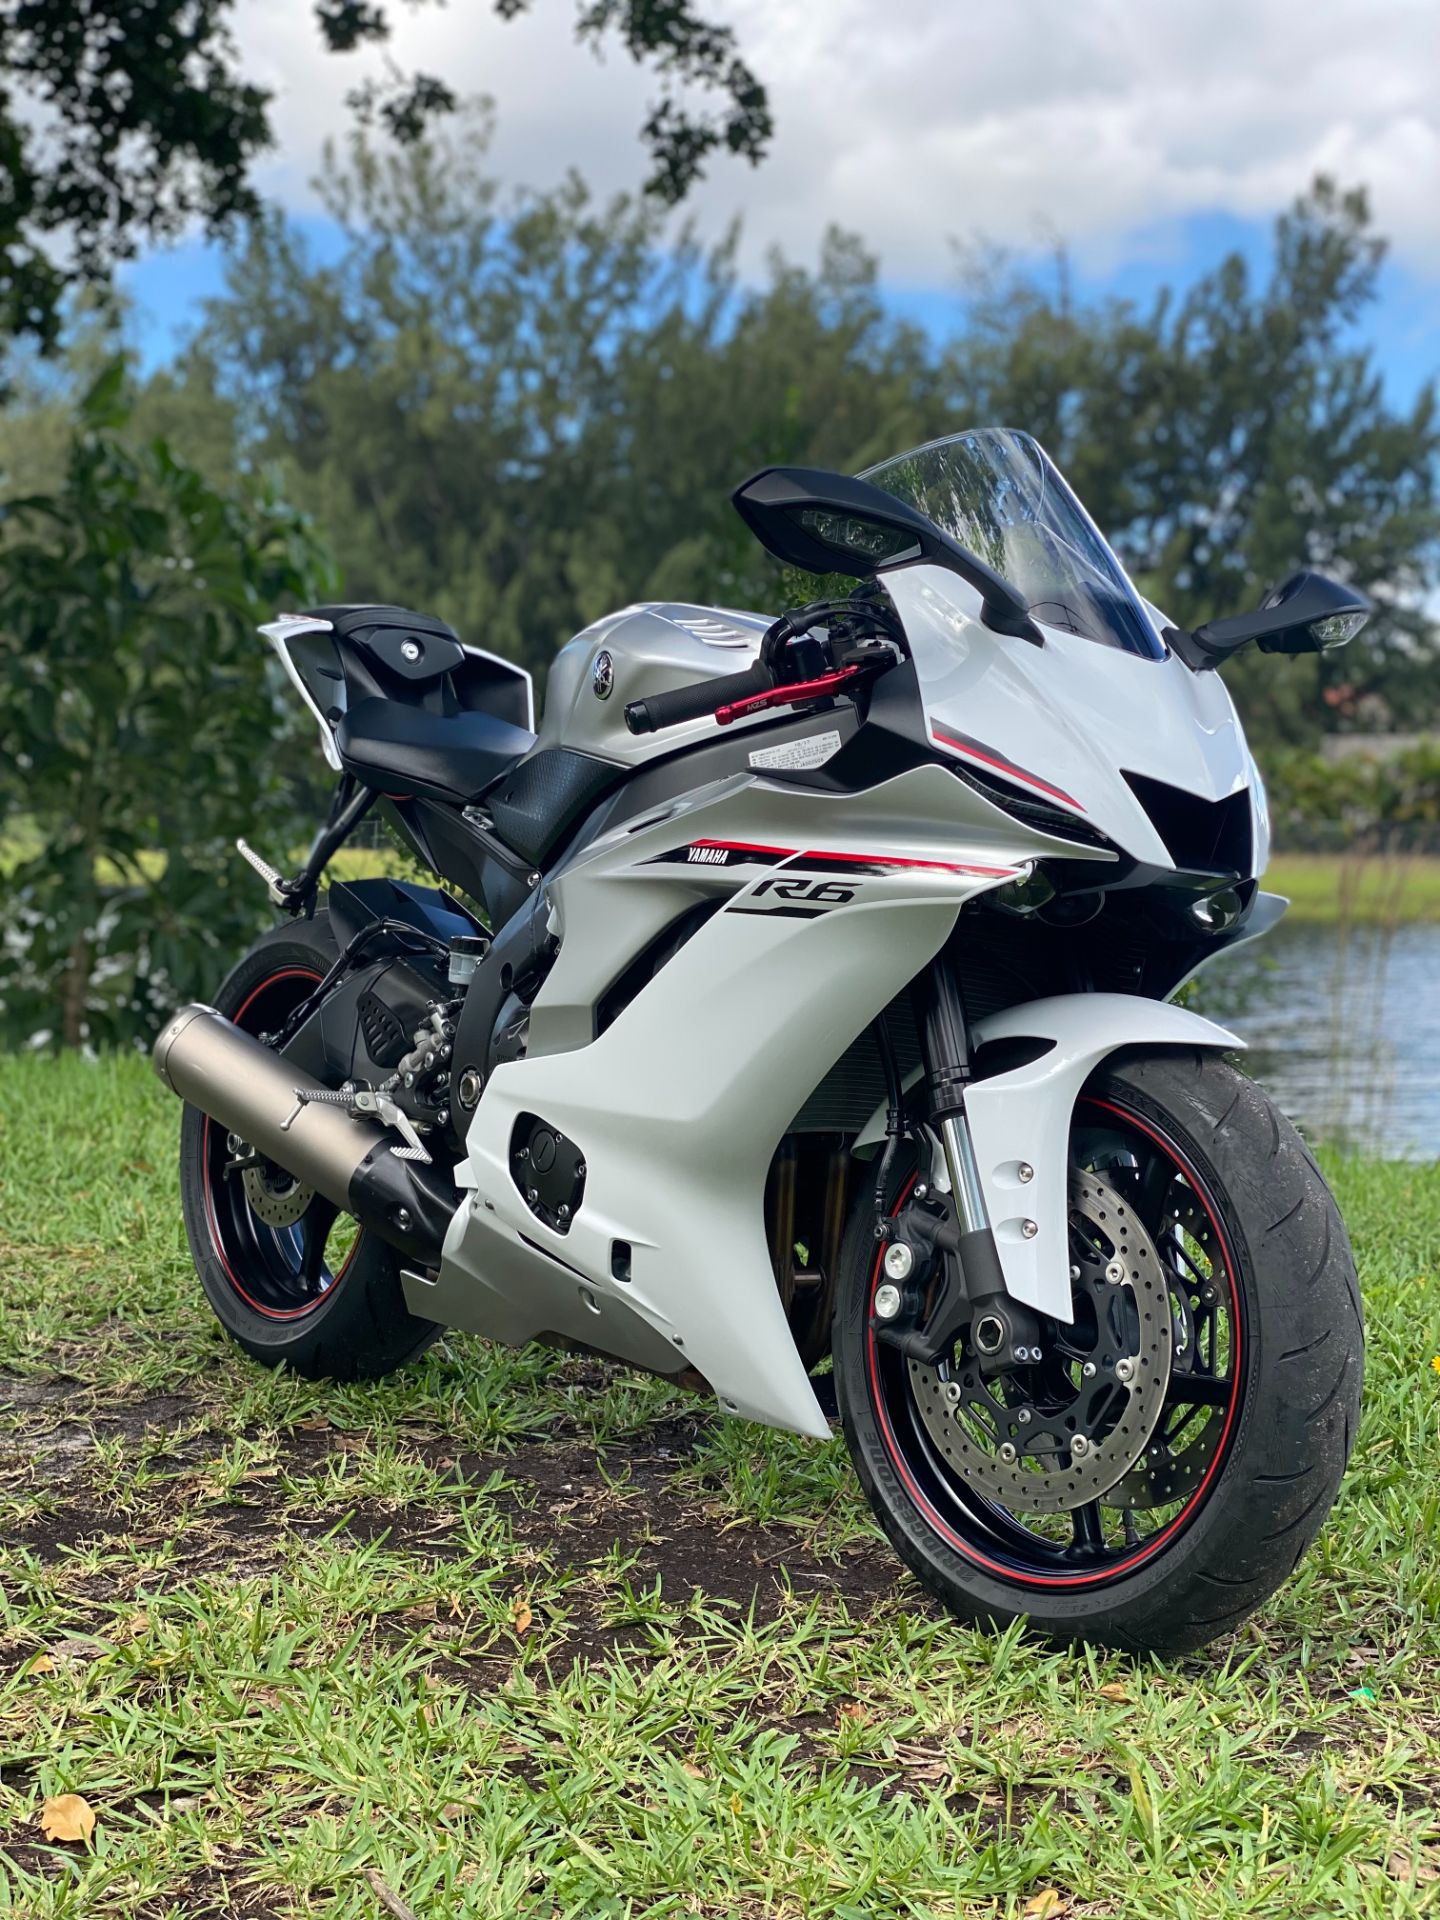 2018 Yamaha YZF-R6 in North Miami Beach, Florida - Photo 2